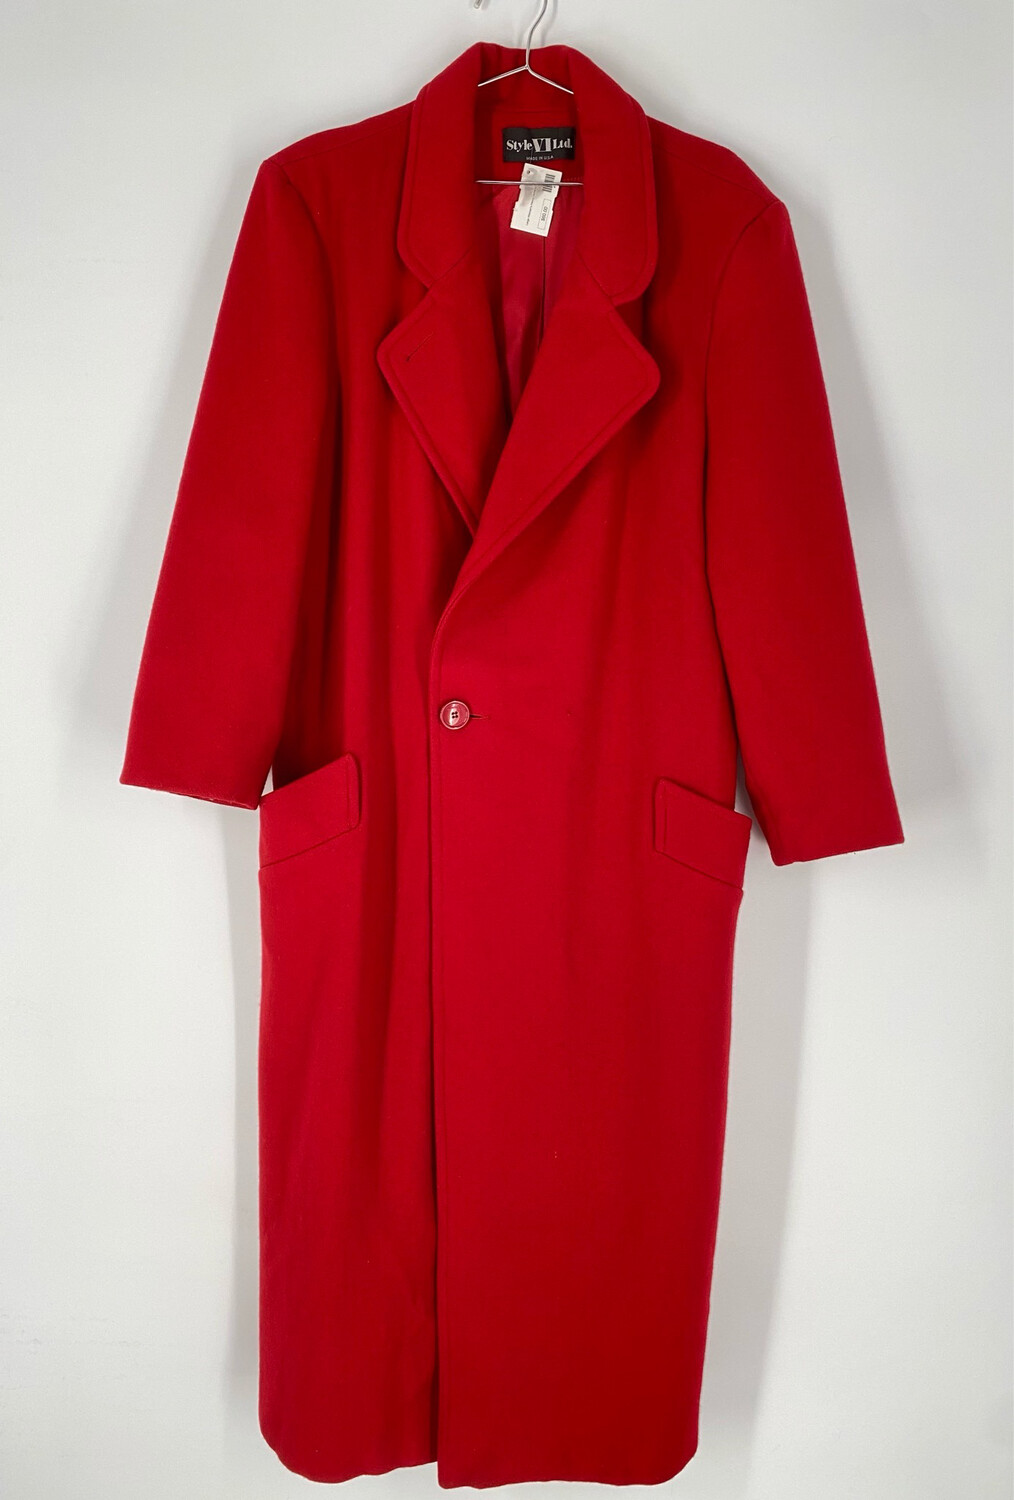 Style VI Ltd. Long Red Wool Coat Size L